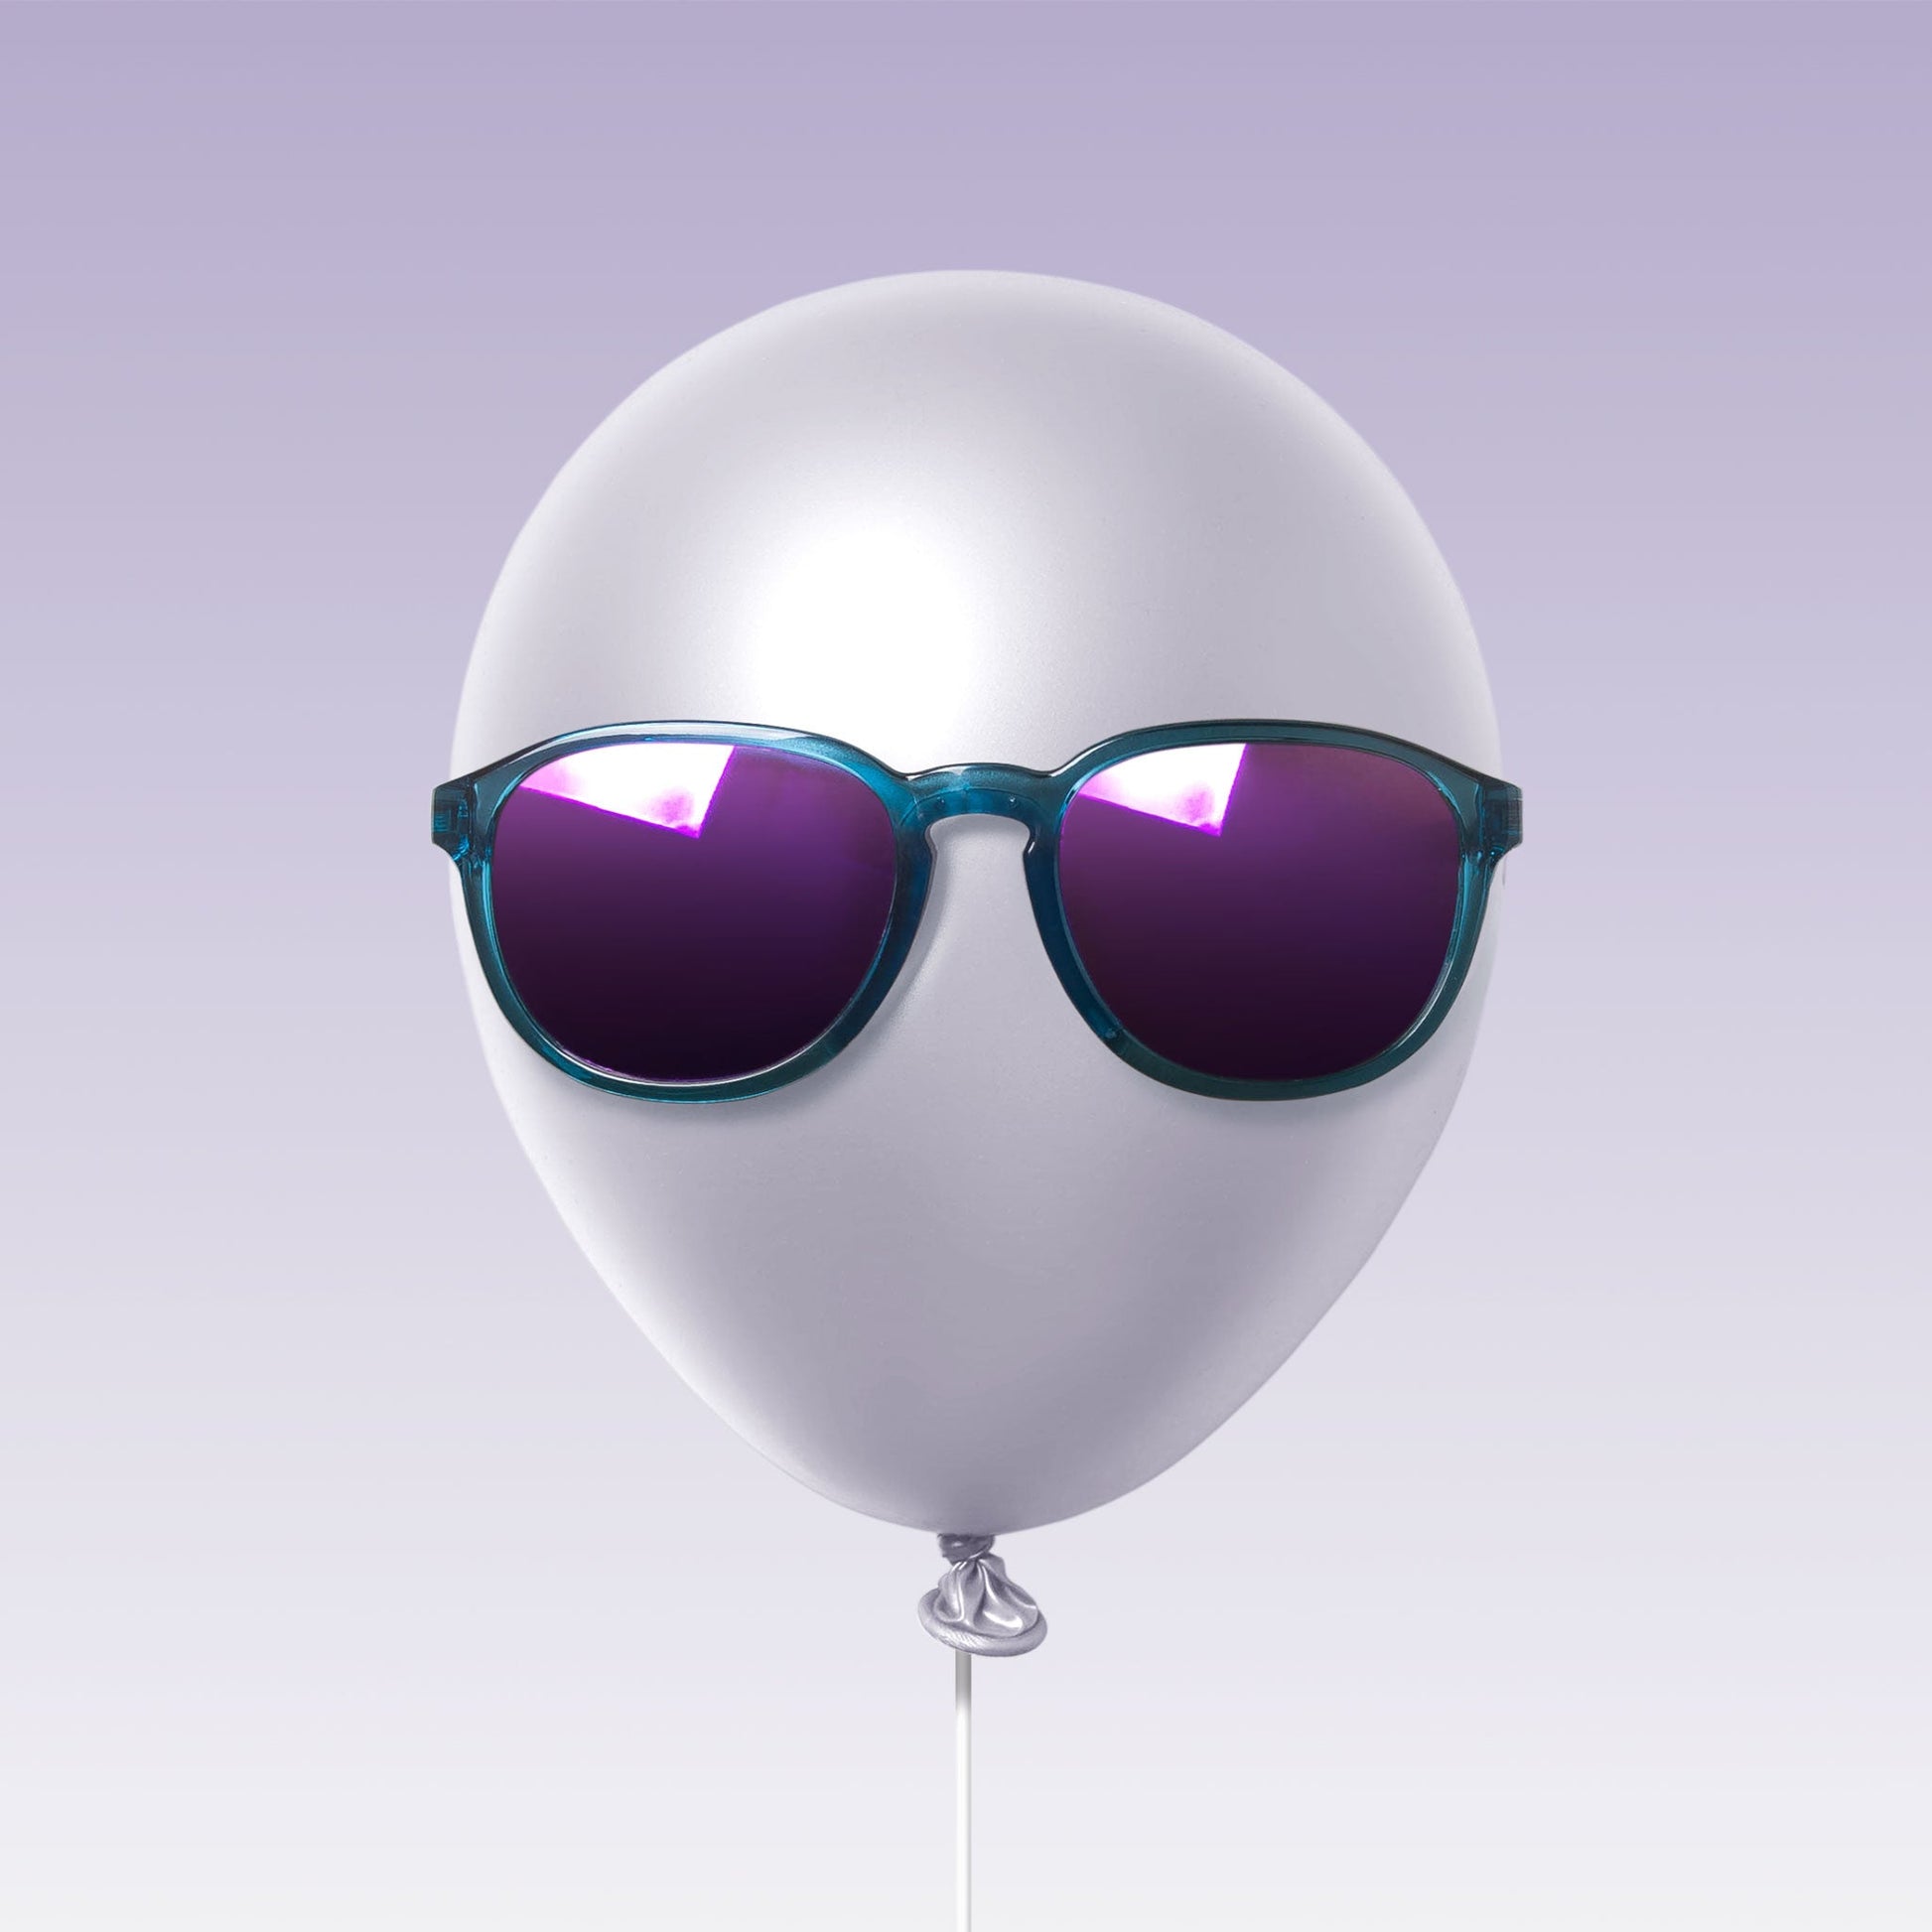 Paxley Sunglasses for Kids Mulholland Steelt 0-5 Balloon